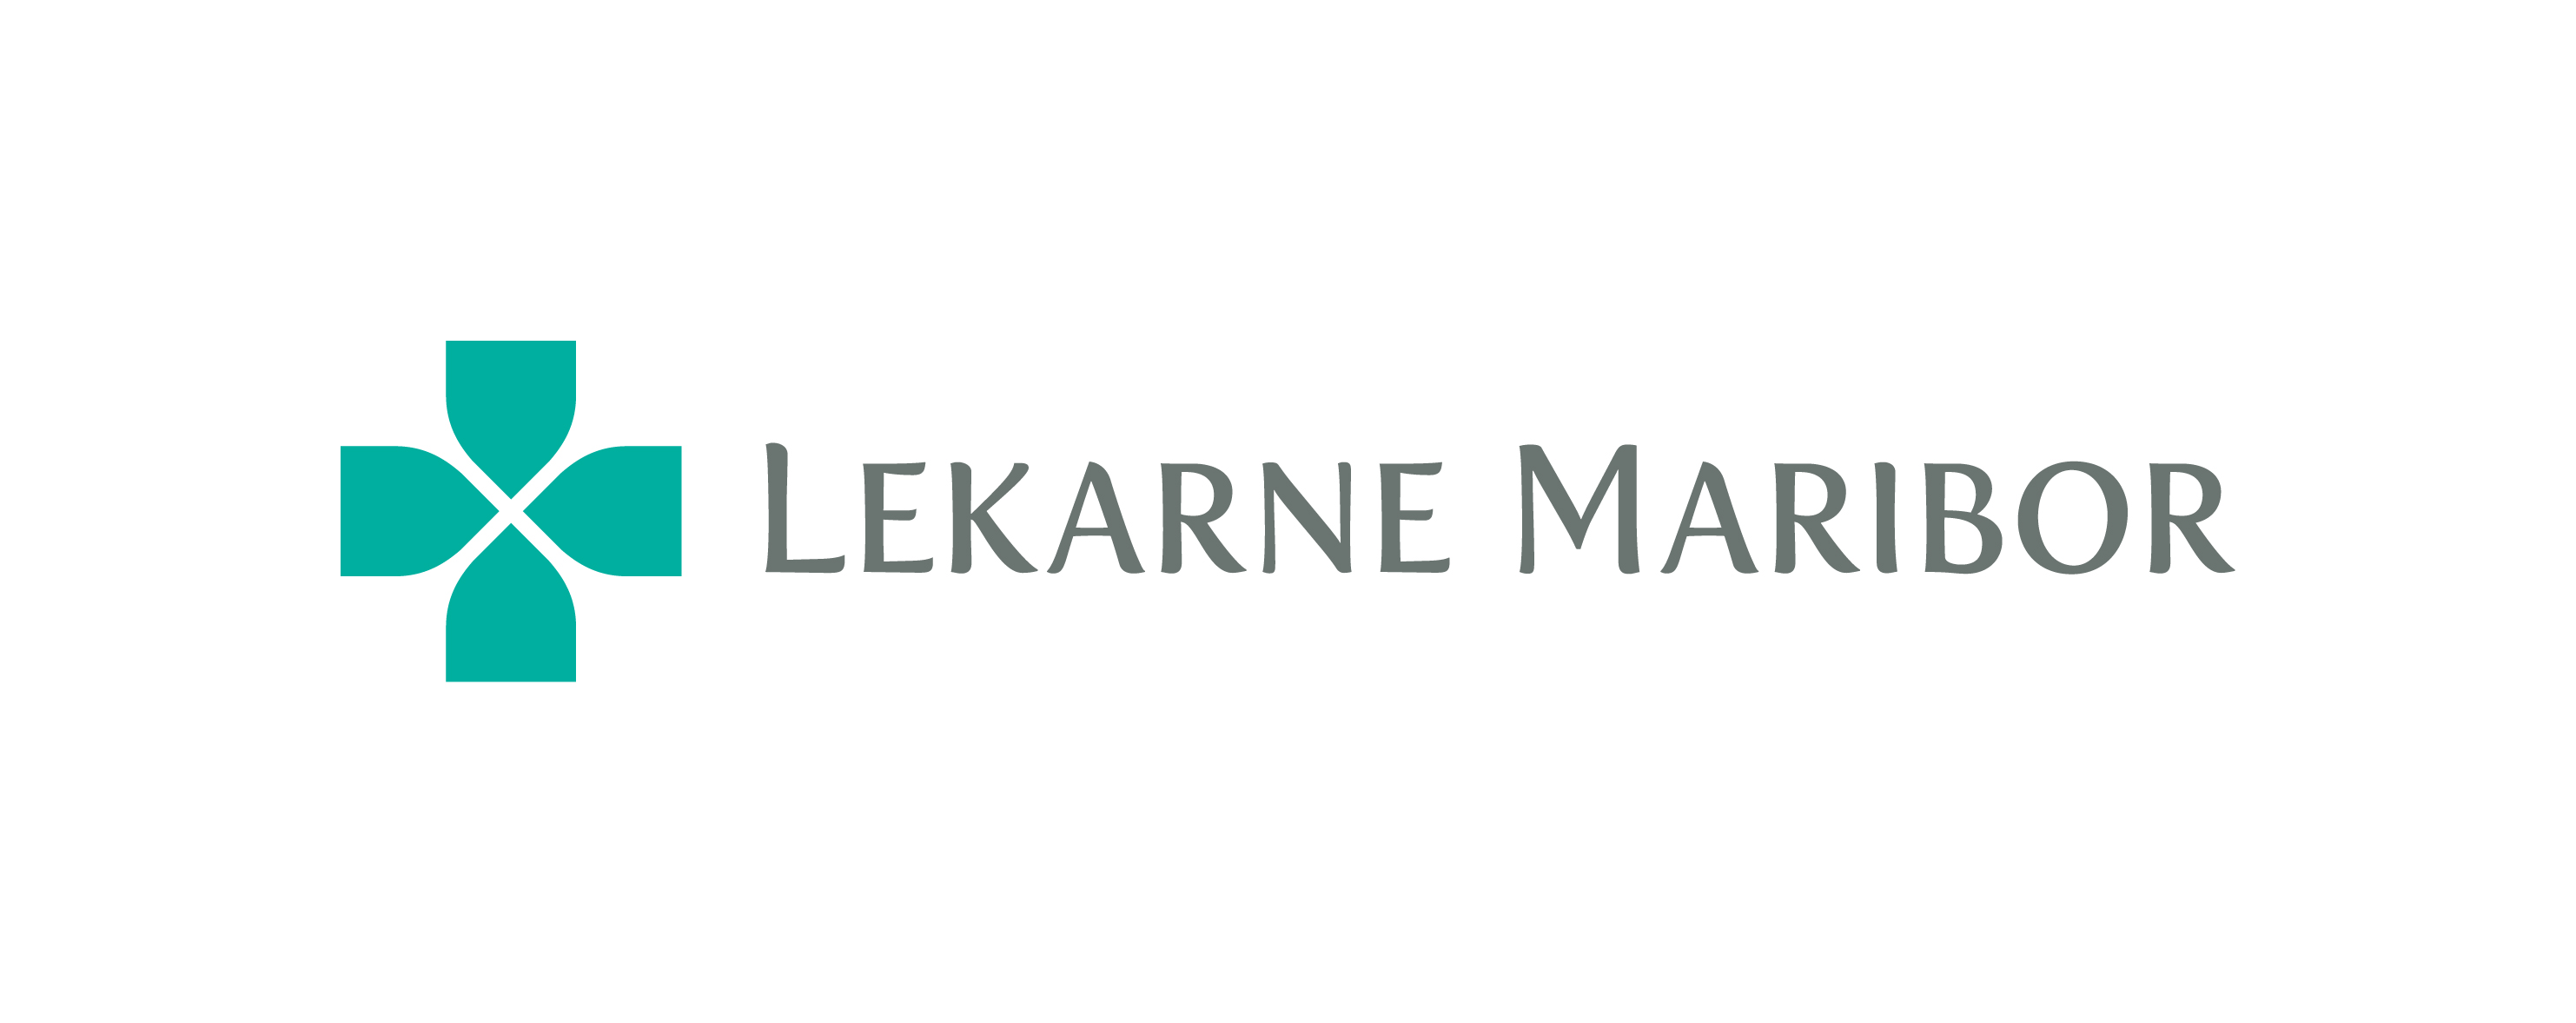 lekarne_maribor_logo.jpg